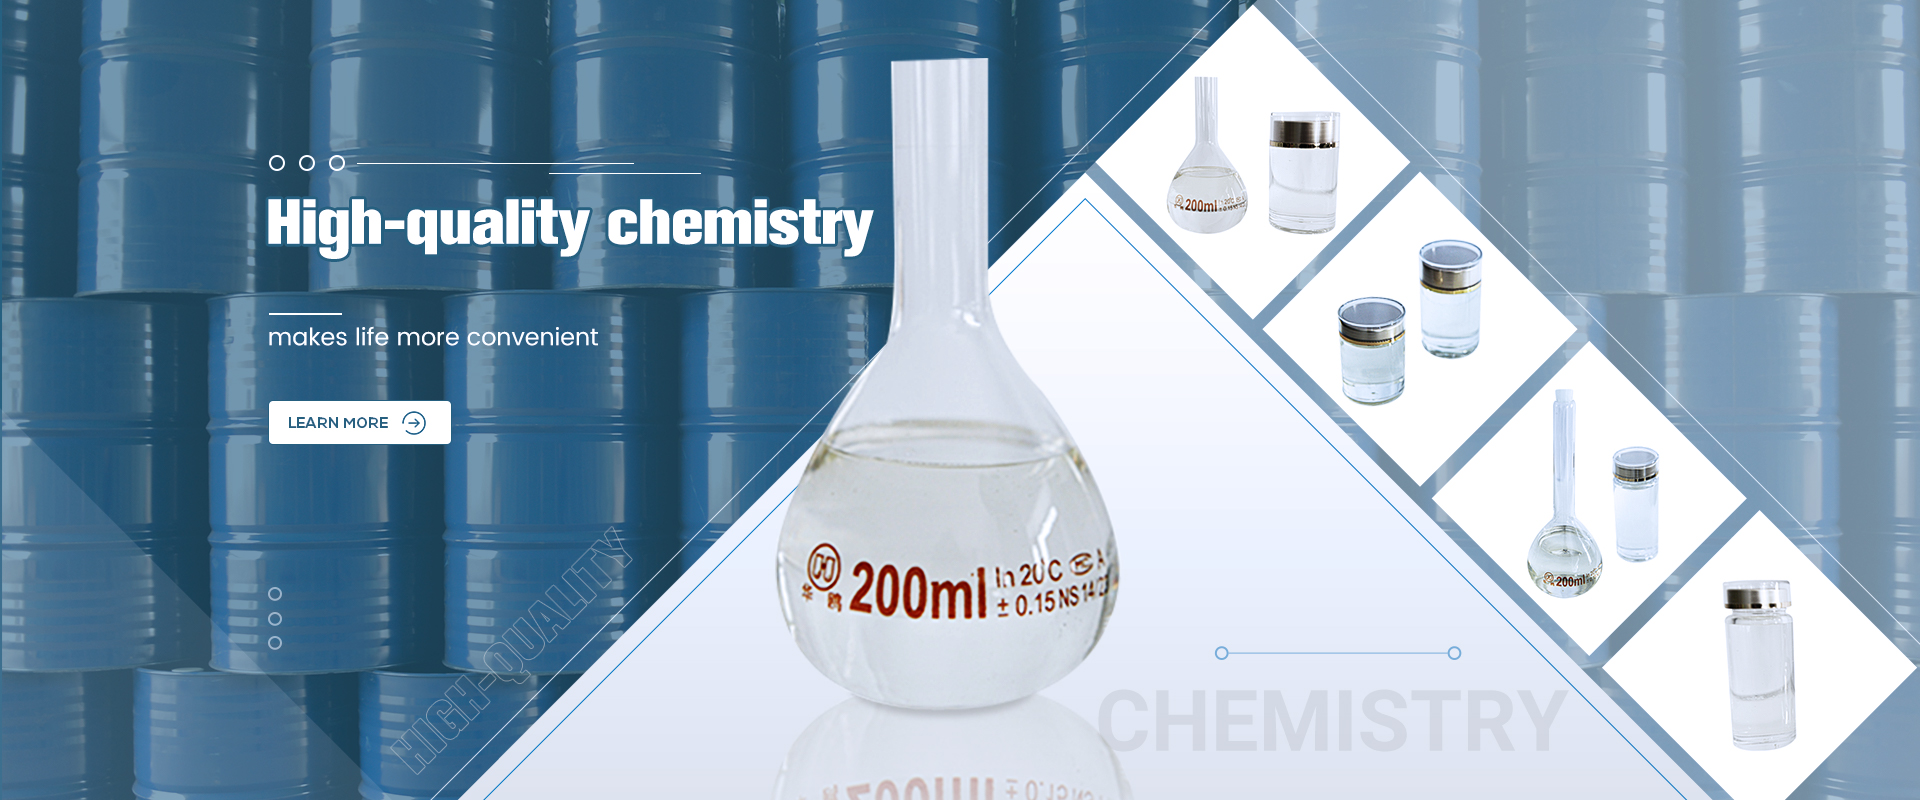 High-quality chemistry